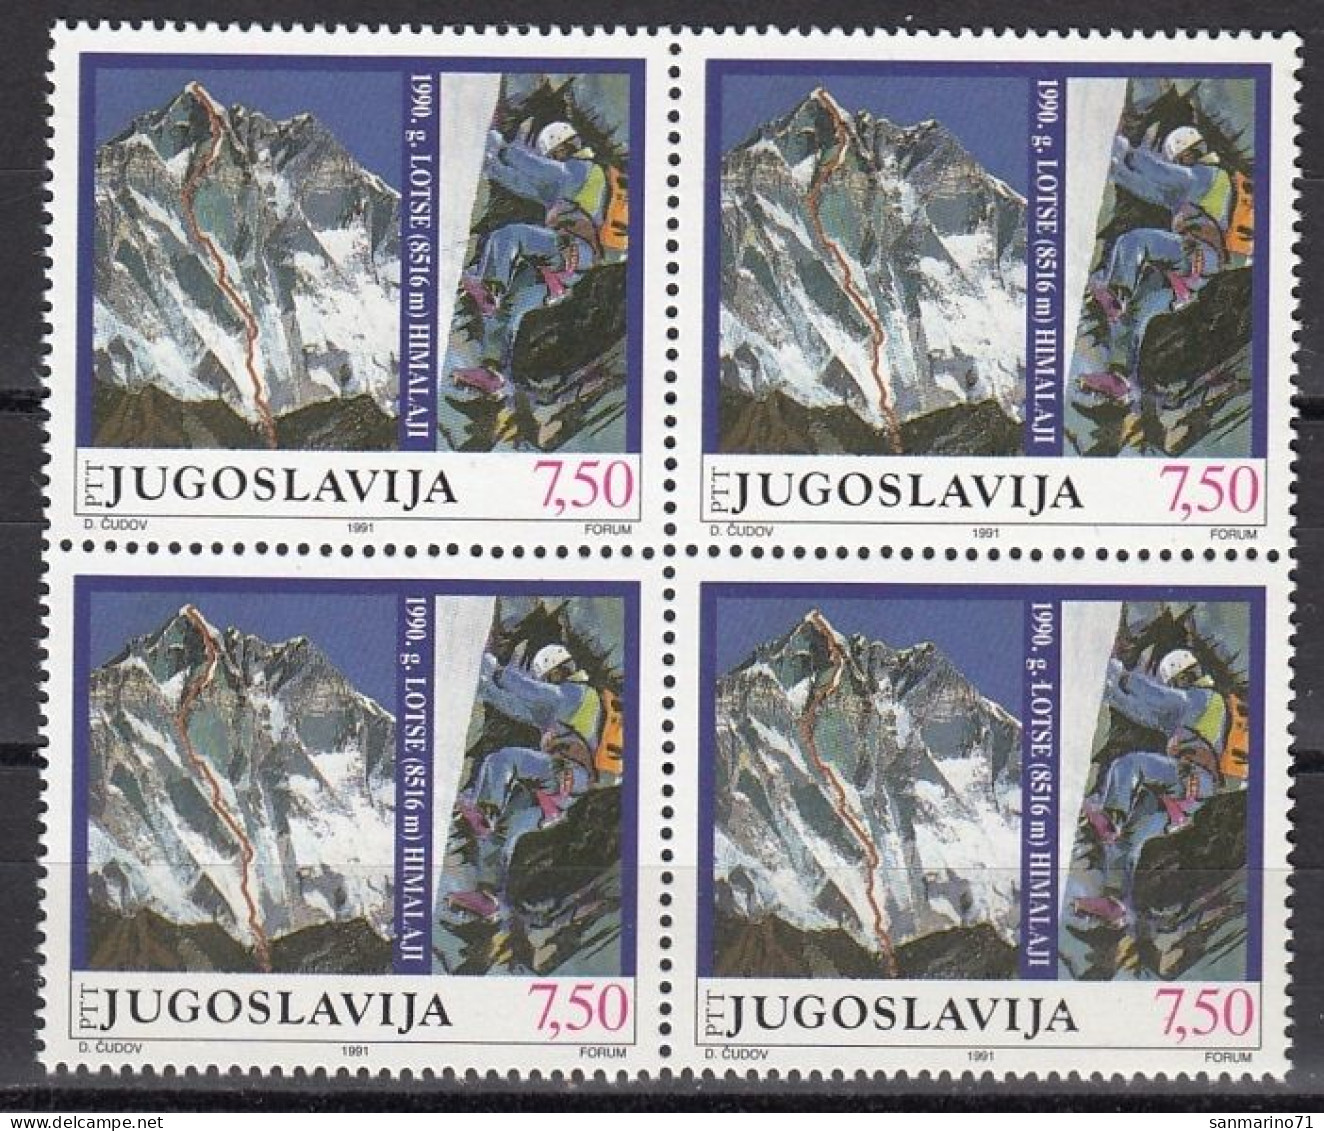 YUGOSLAVIA 2475,unused - Mountains